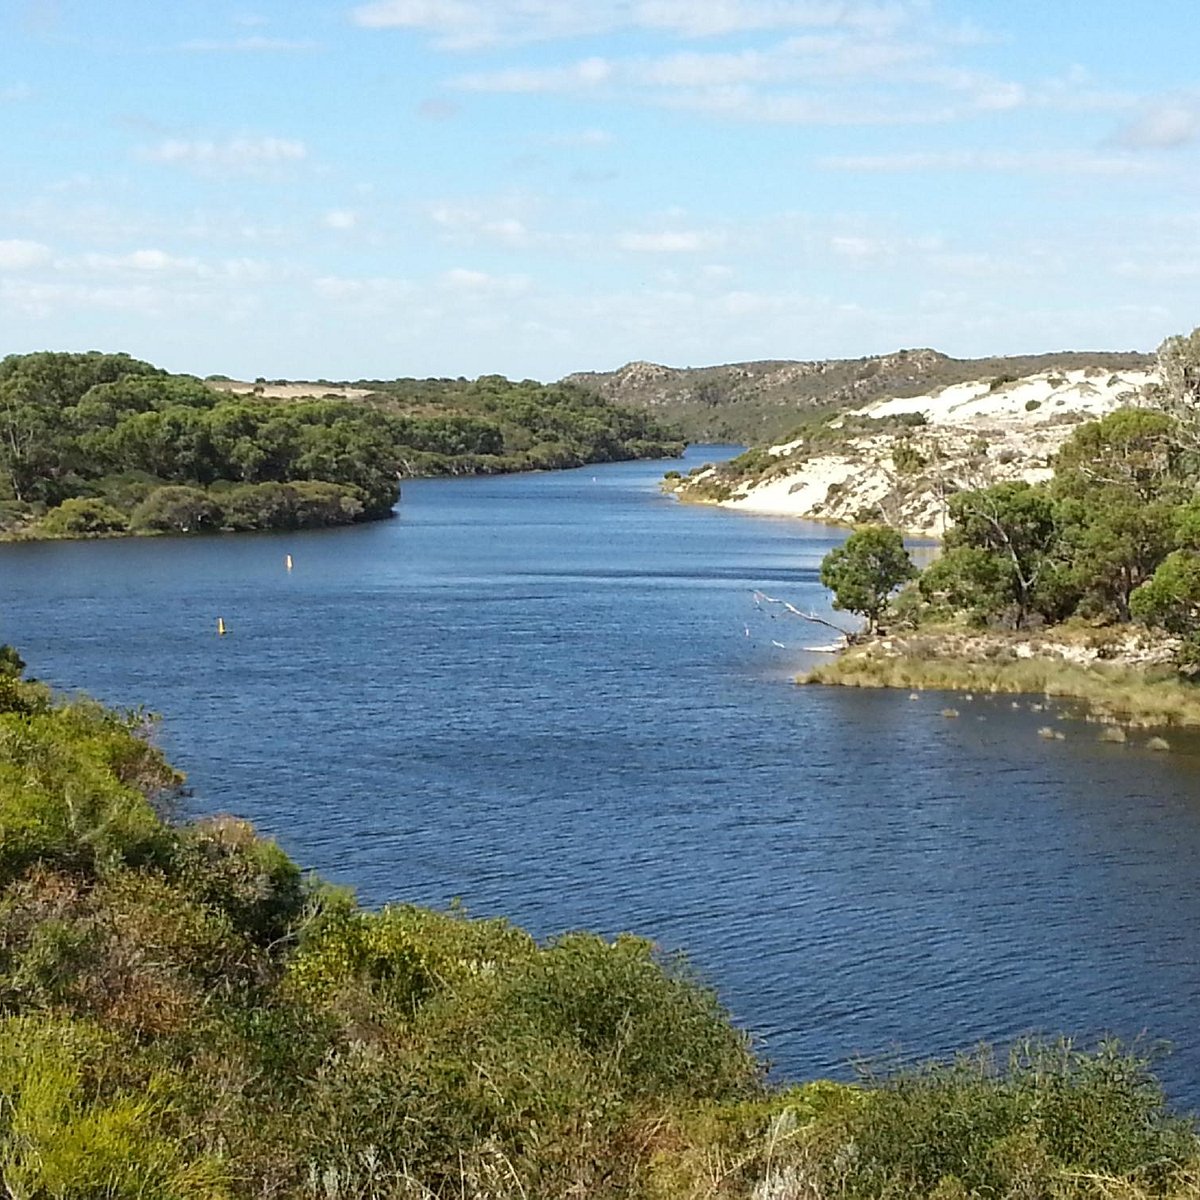 West river. Cobungra River Австралия. Ашбертон река. Западная Австралия река какая?. Река Мур-об султанбенд.